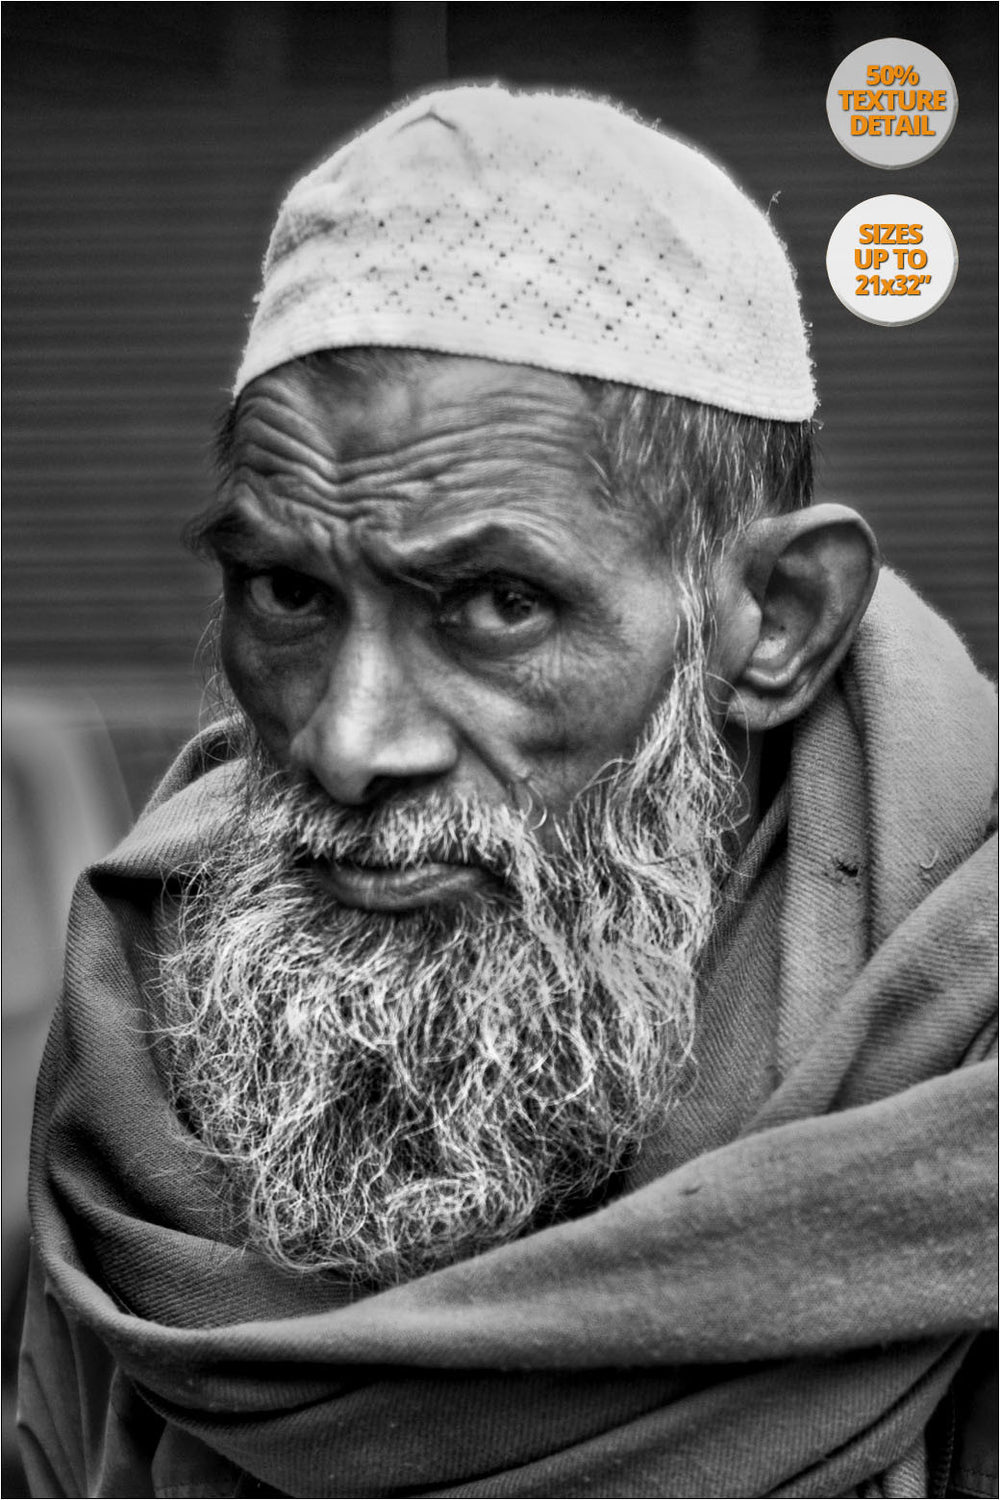 Elderly man, Main Bazaar, New Delhi, India.